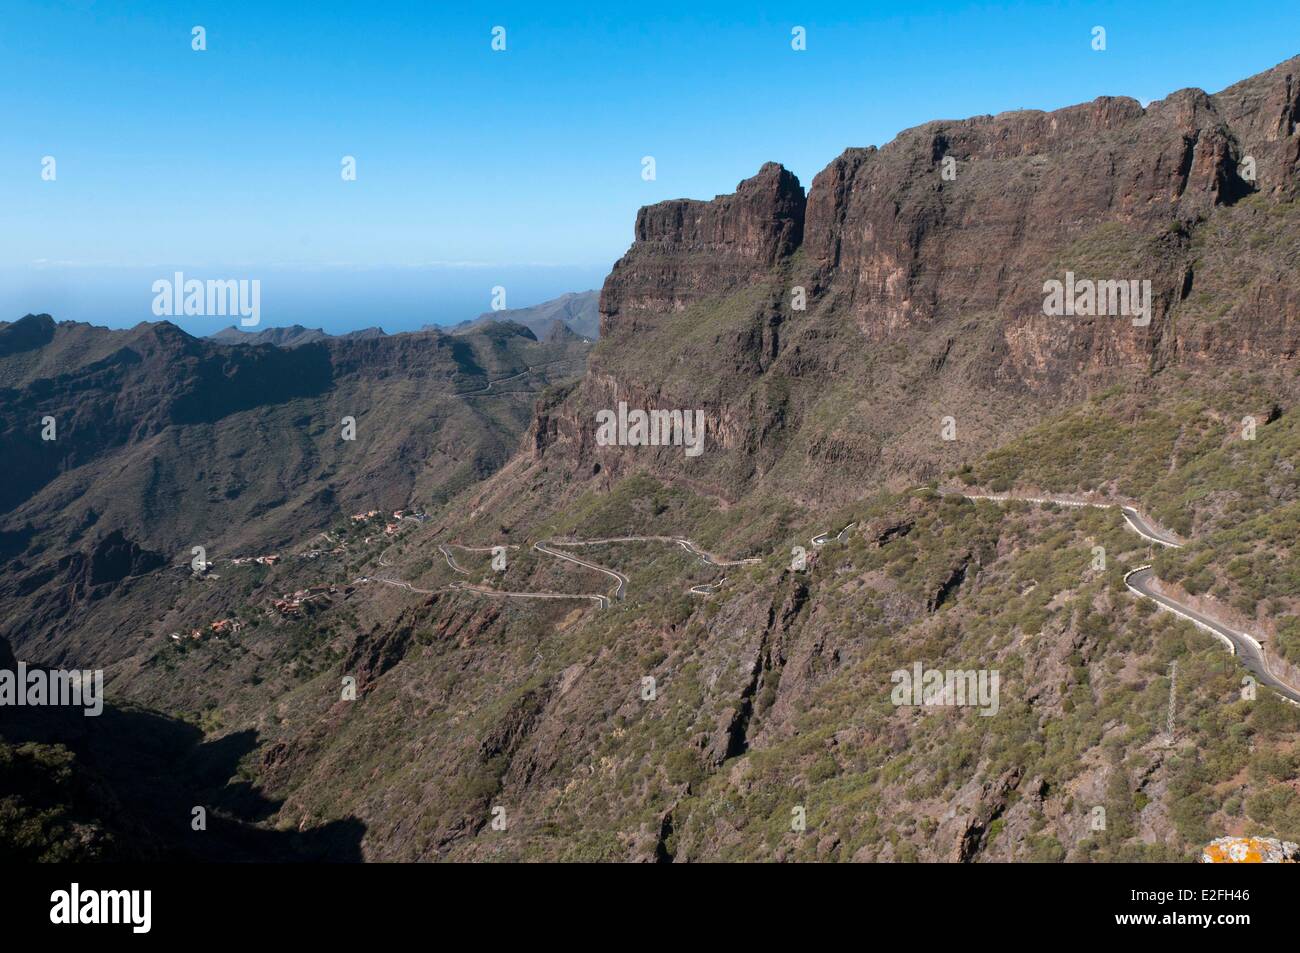 L'Espagne, Iles Canaries, Tenerife Island, Parque Rural de Teno, mountain road Banque D'Images